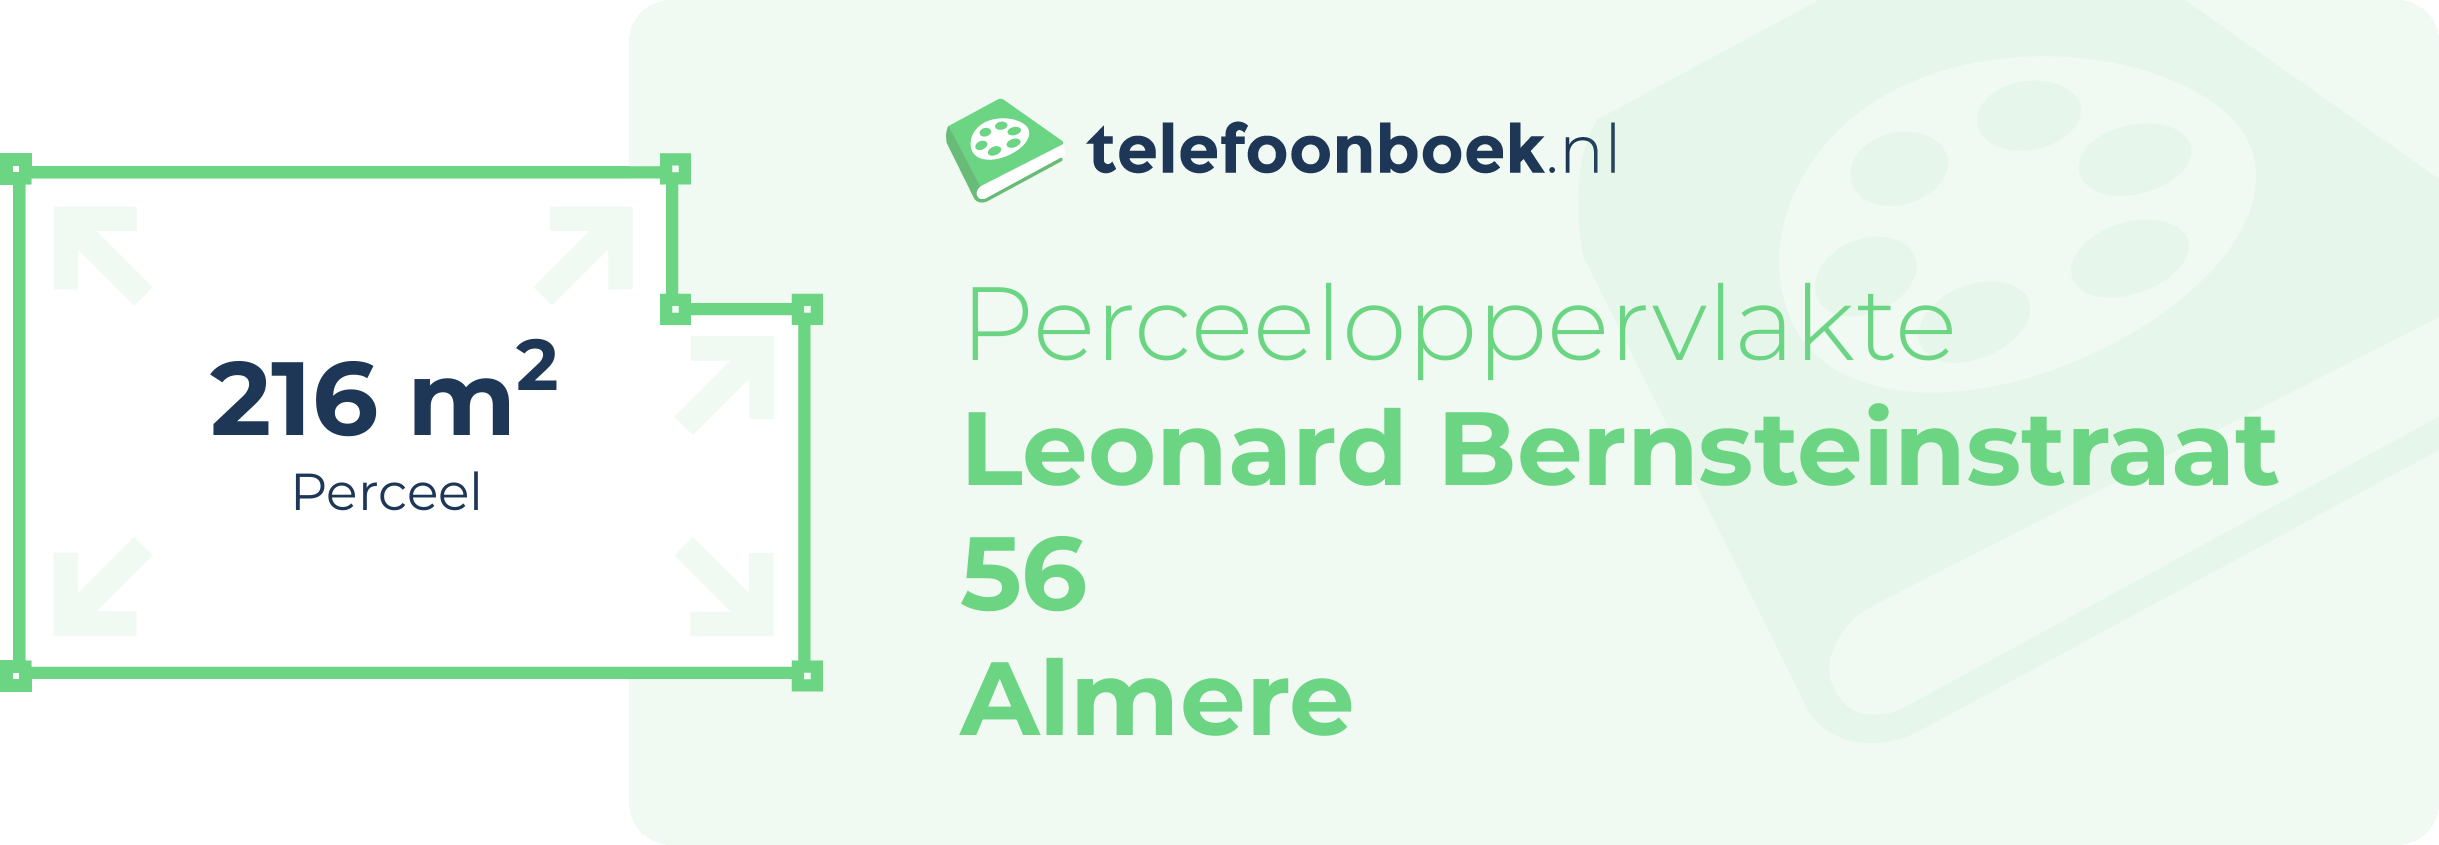 Perceeloppervlakte Leonard Bernsteinstraat 56 Almere